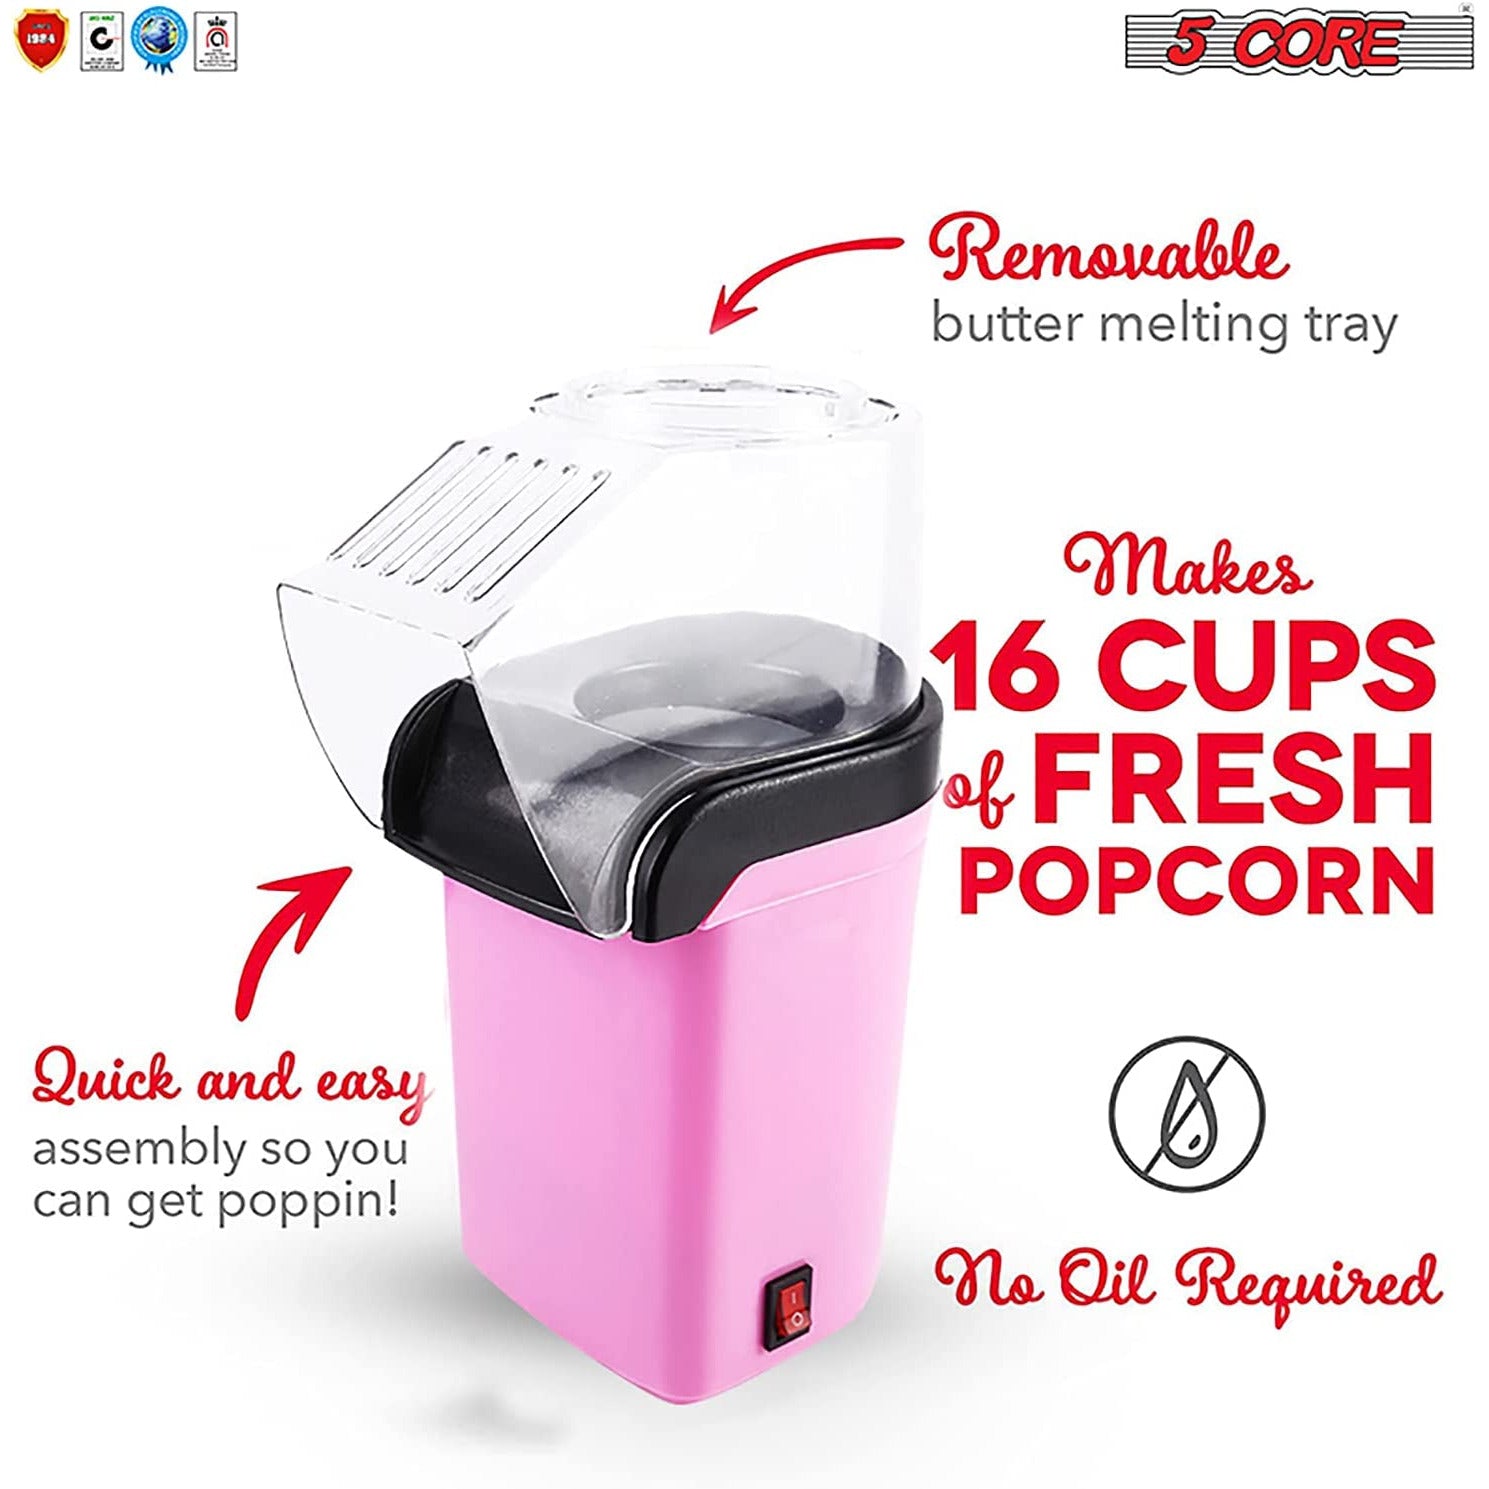 Hot Air Popcorn Maker Machine 1100W Electric Popcorn Popper Kernel Corn Maker BPA Free 5 Core - KME means the very best